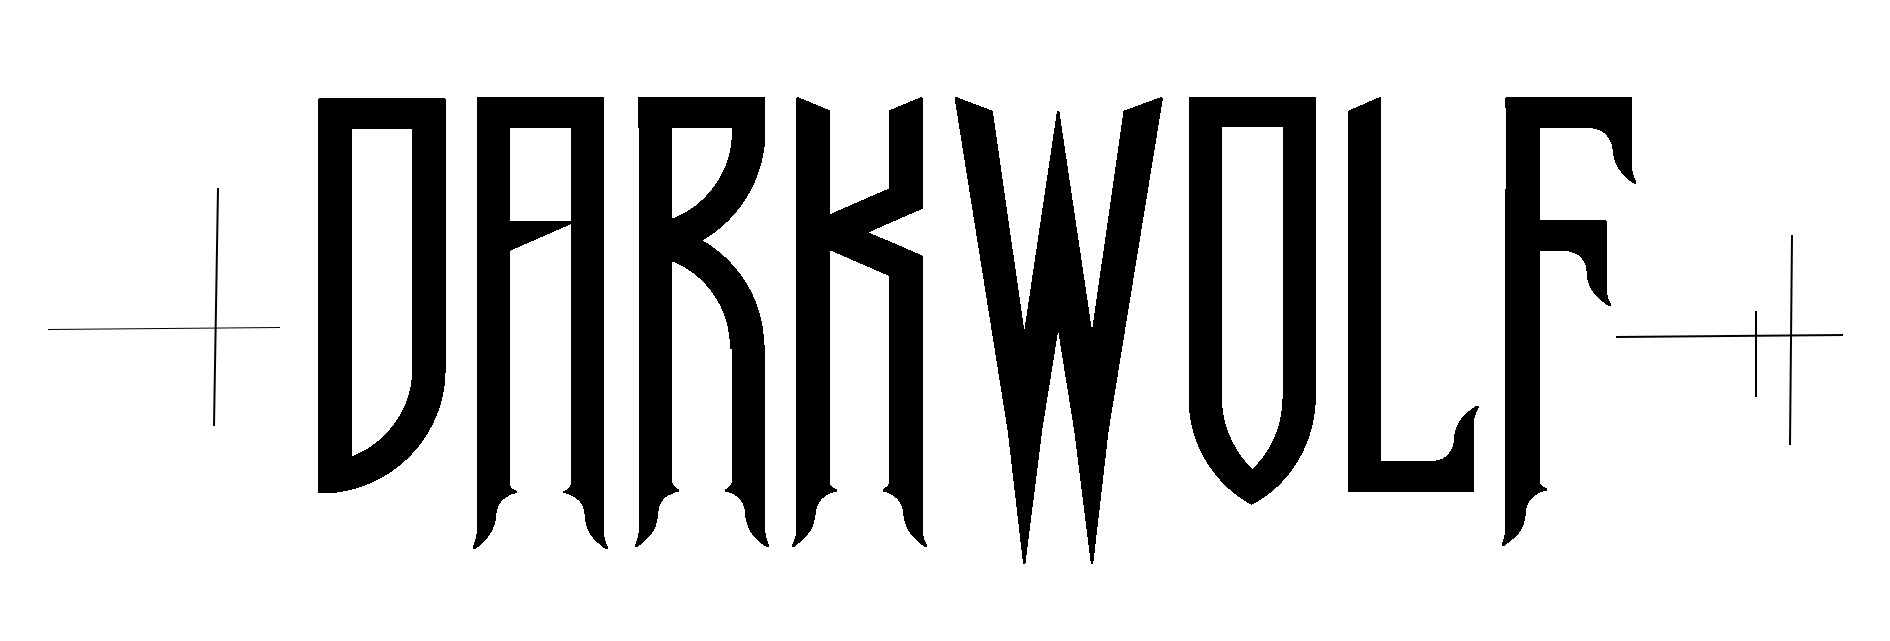 Darkwolf Logo Transparent Black 